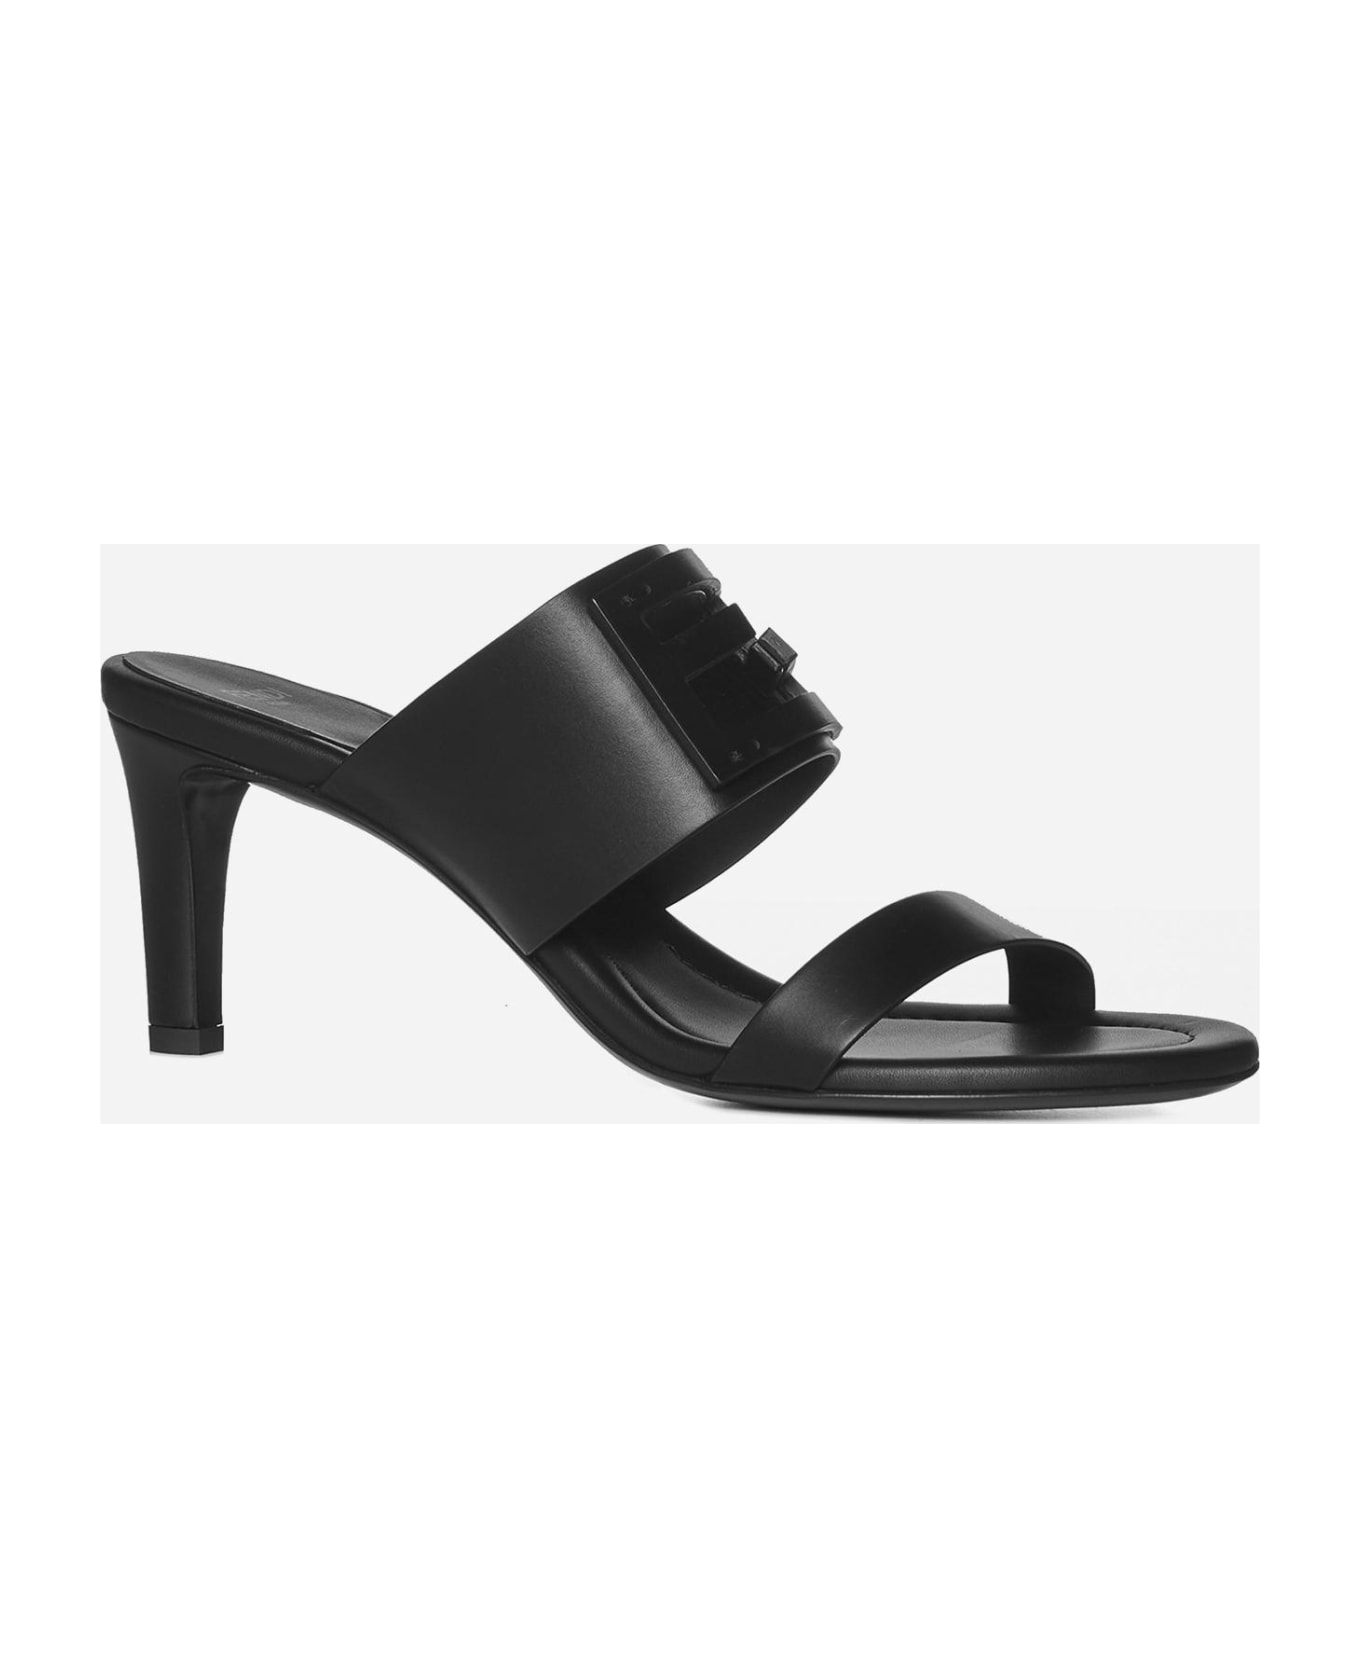 Fendi Baguette Leather Sandals - NERO